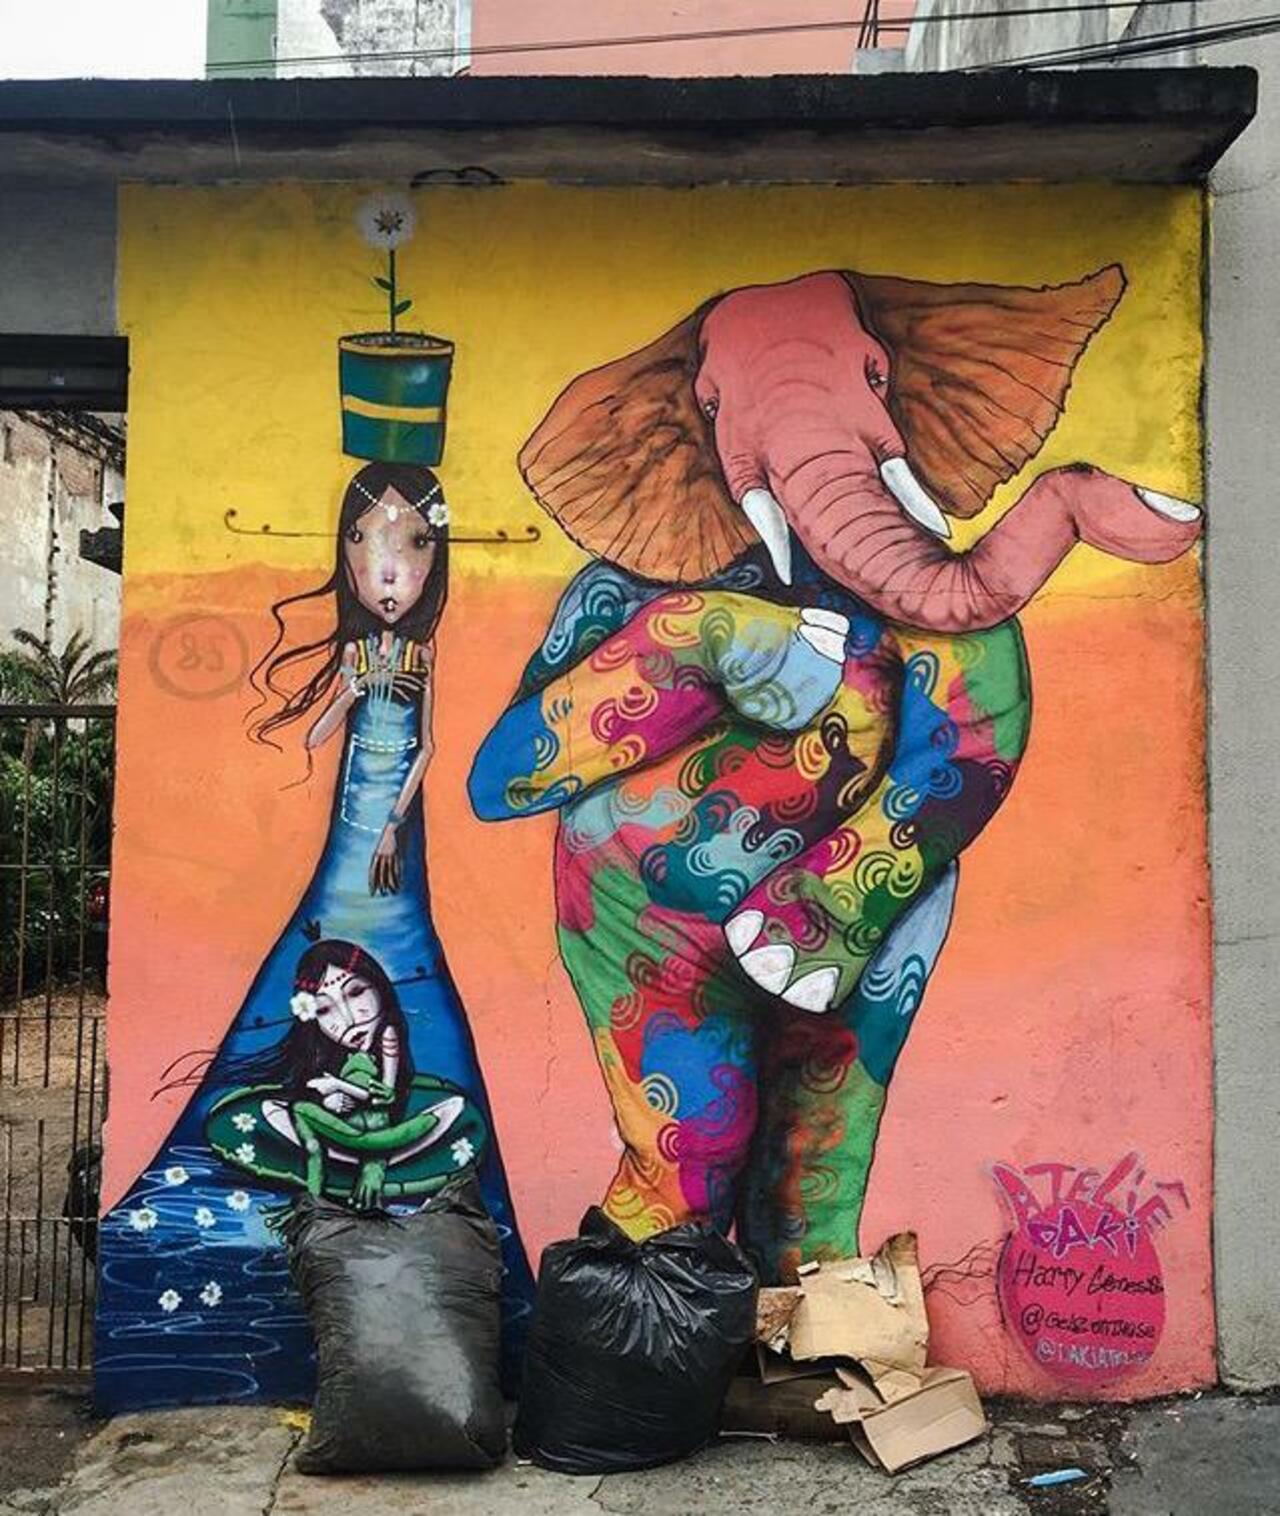 Street Art by Harry Geneis & Gelson in São Paulo #art #mural #graffiti #streetart http://t.co/SlLbhuMZfD … … http://twitter.com/charlesjackso14/status/648021471982452736